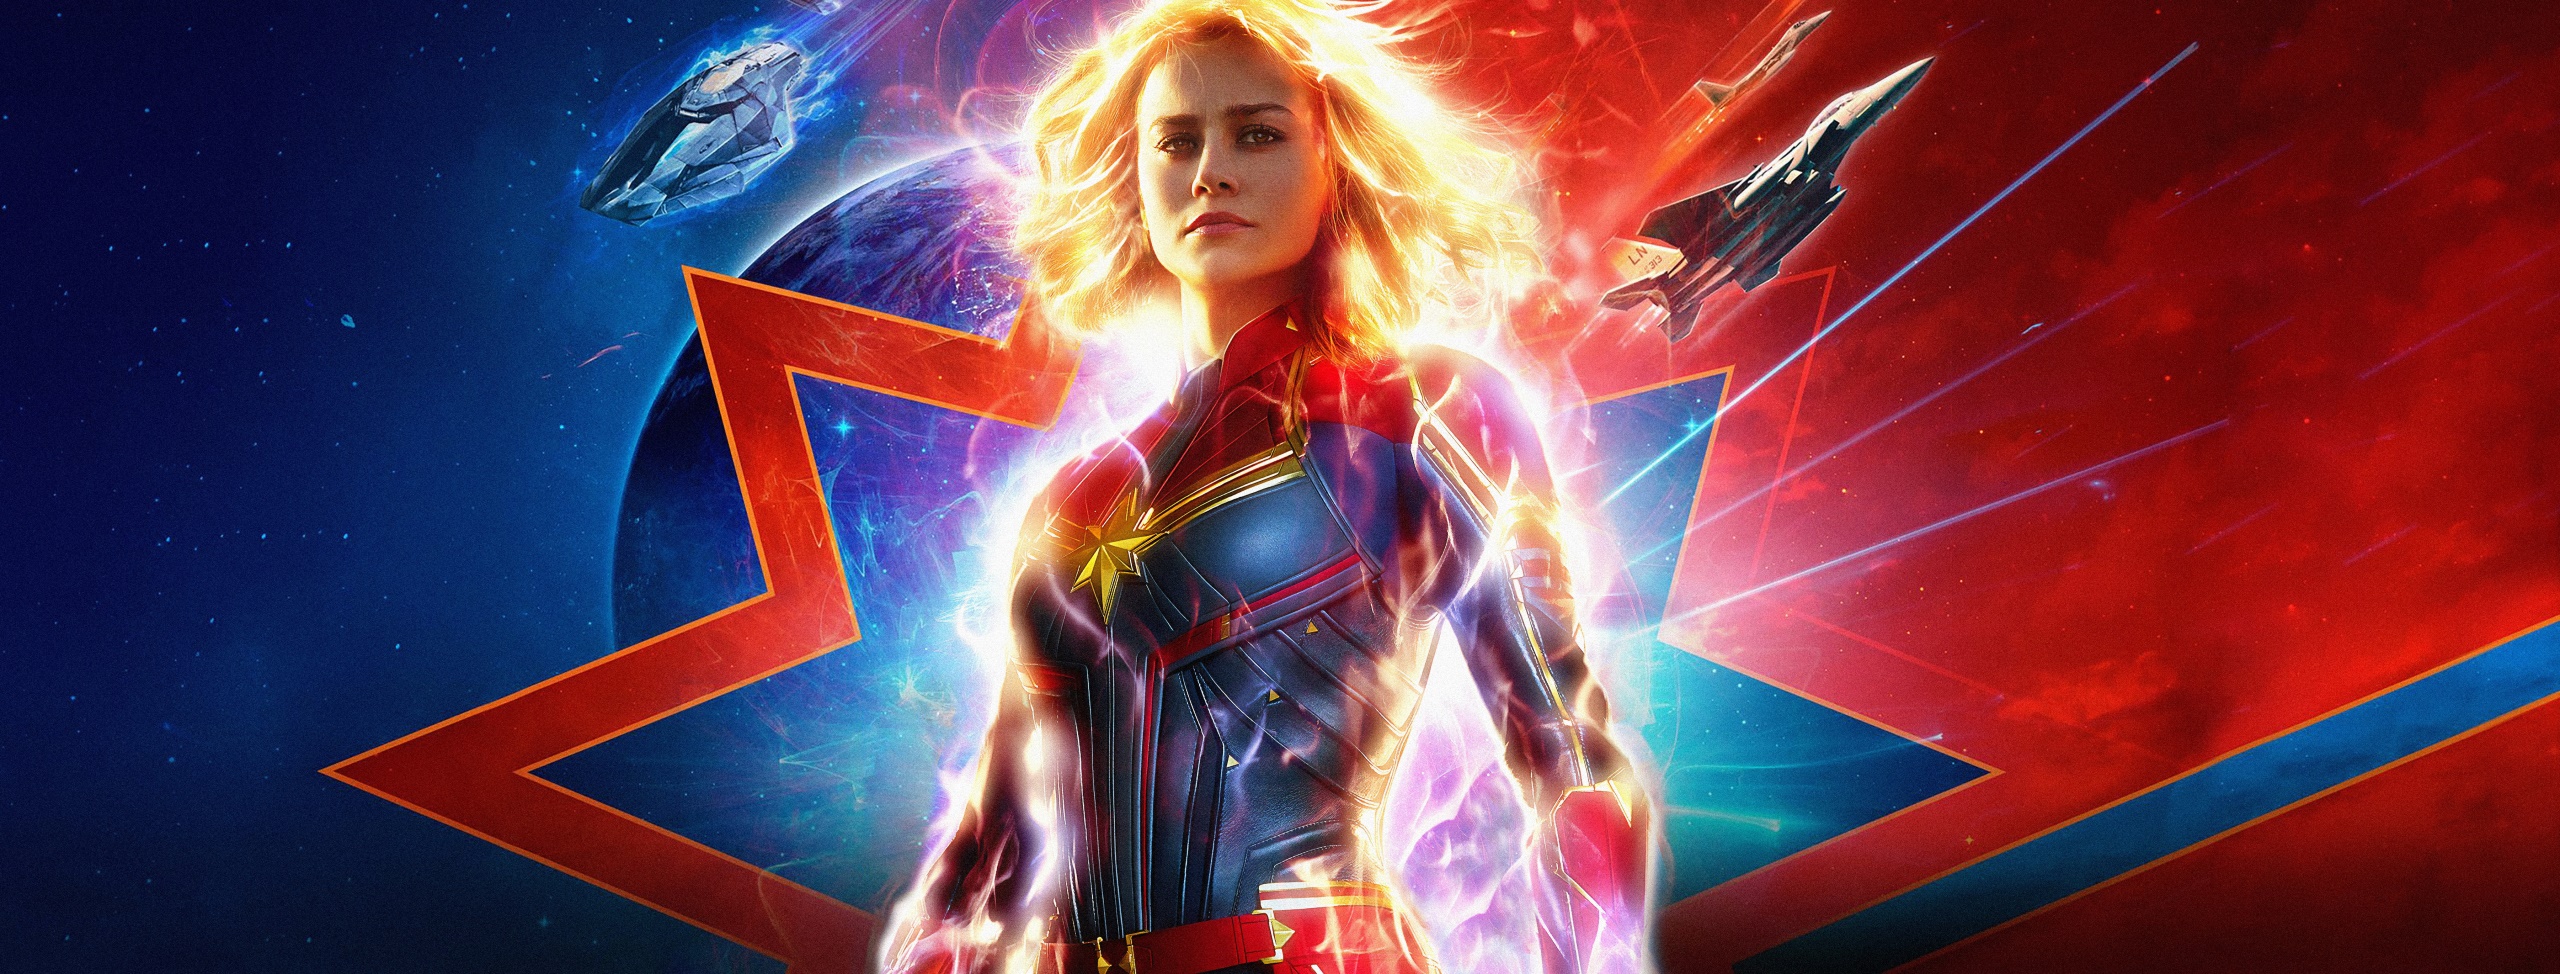 People 2560x974 Brie Larson movies superheroines fantasy girl Marvel Cinematic Universe Captain Marvel women